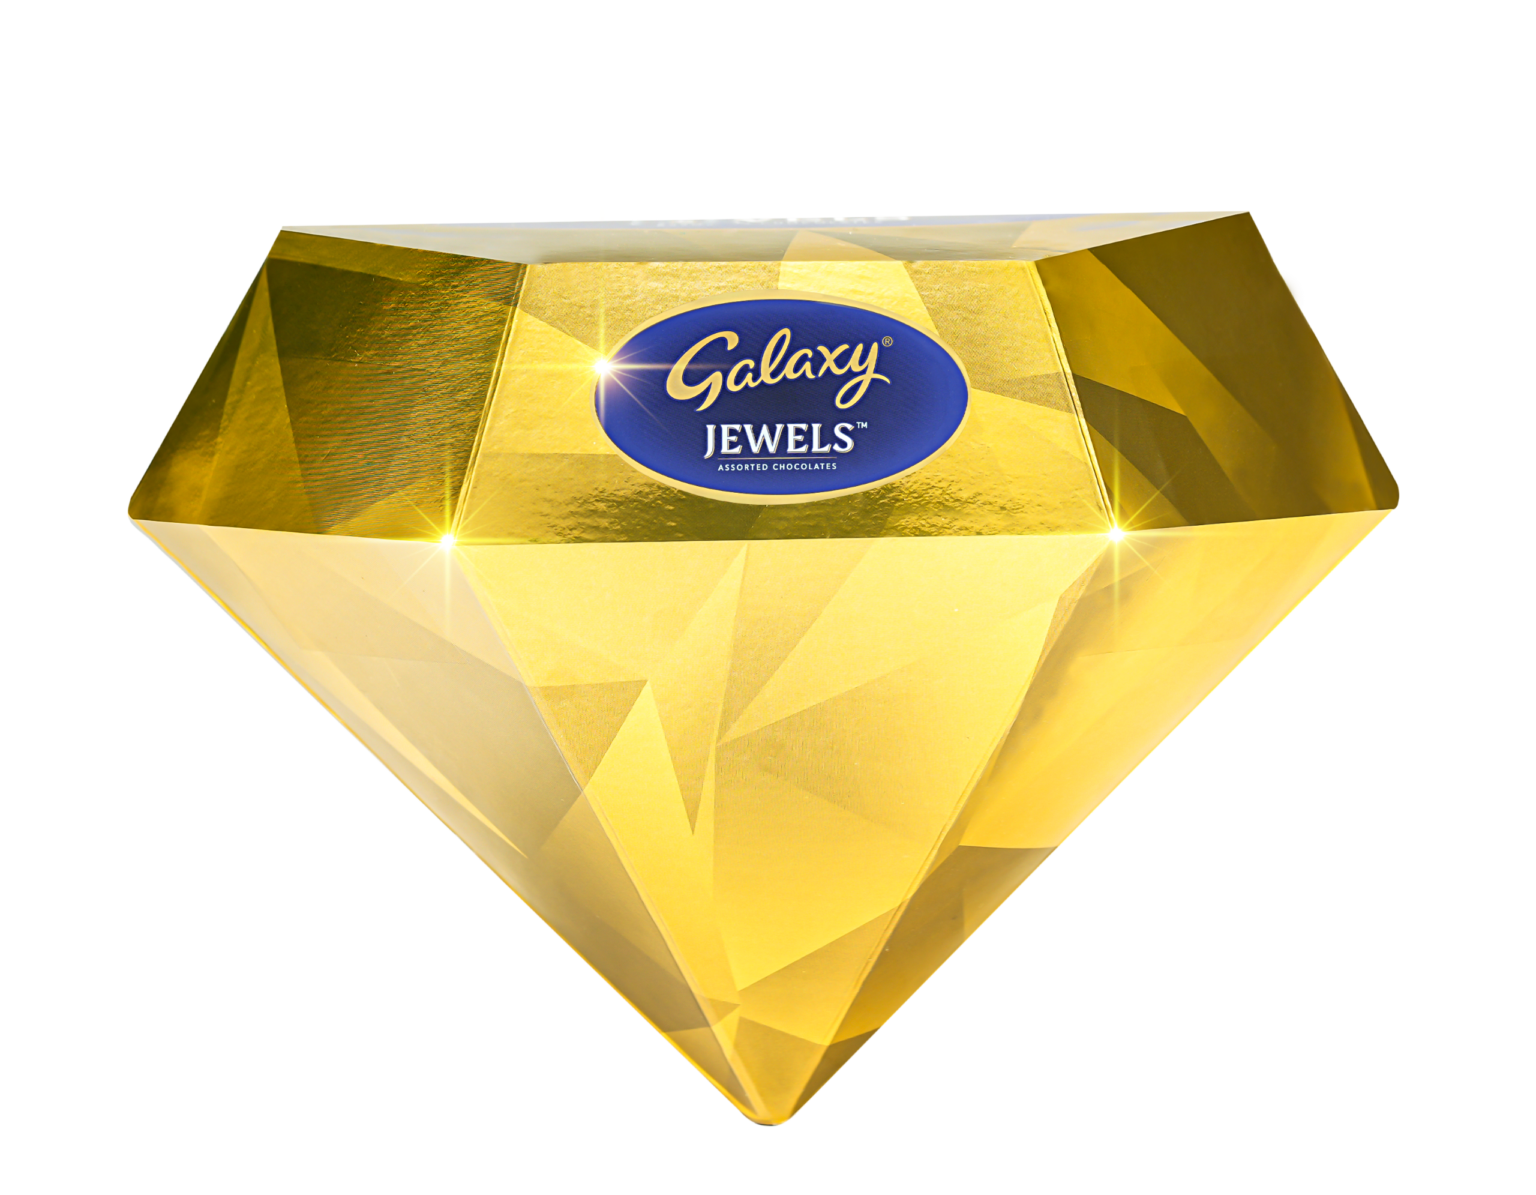 Mars Wrigley India ने लॉन्च किया GALAXY® Jewels,